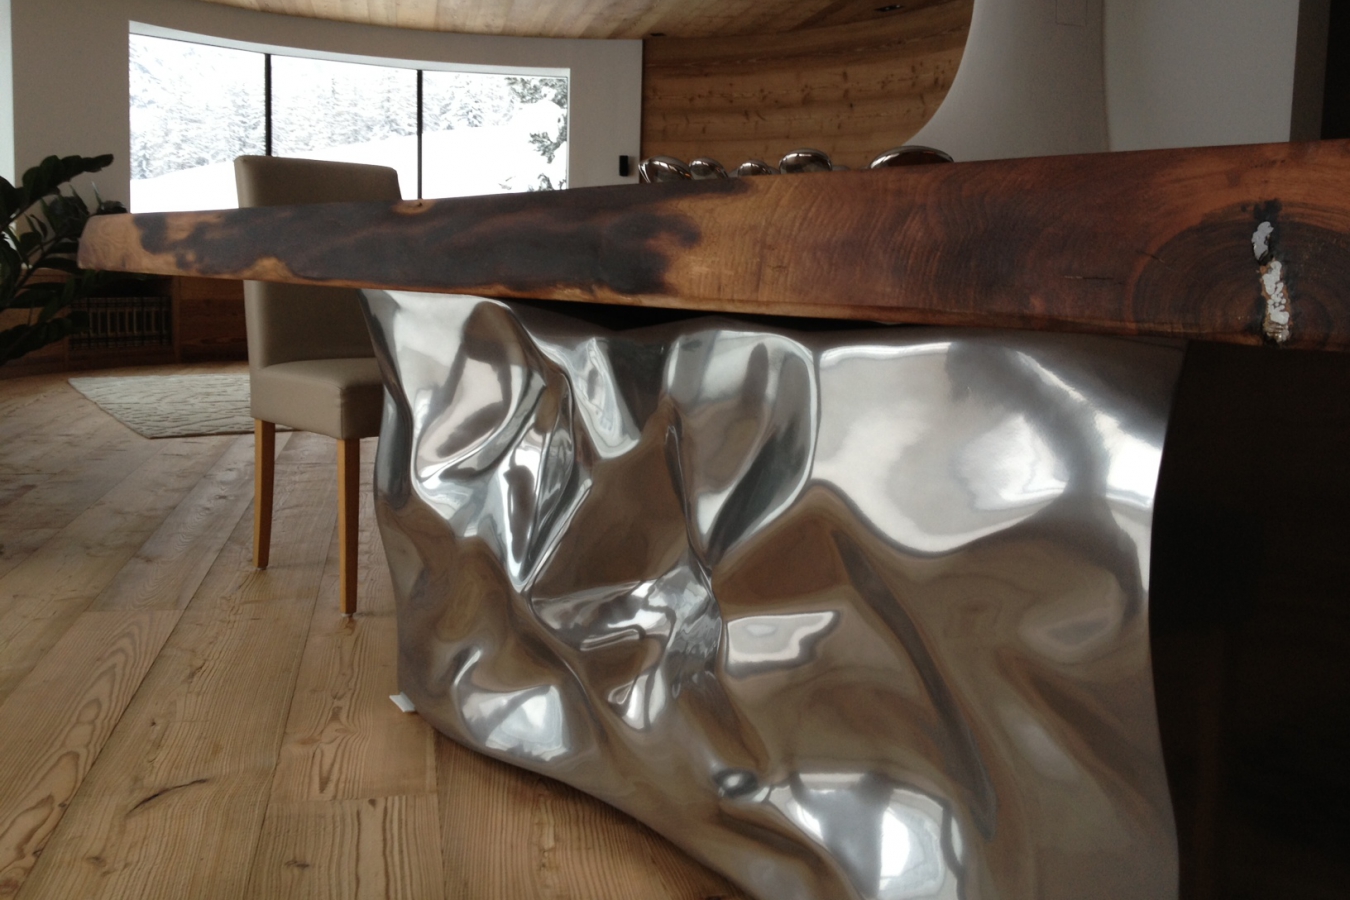 Interiordesign ROWI - 3D Wood three dimensional thinking